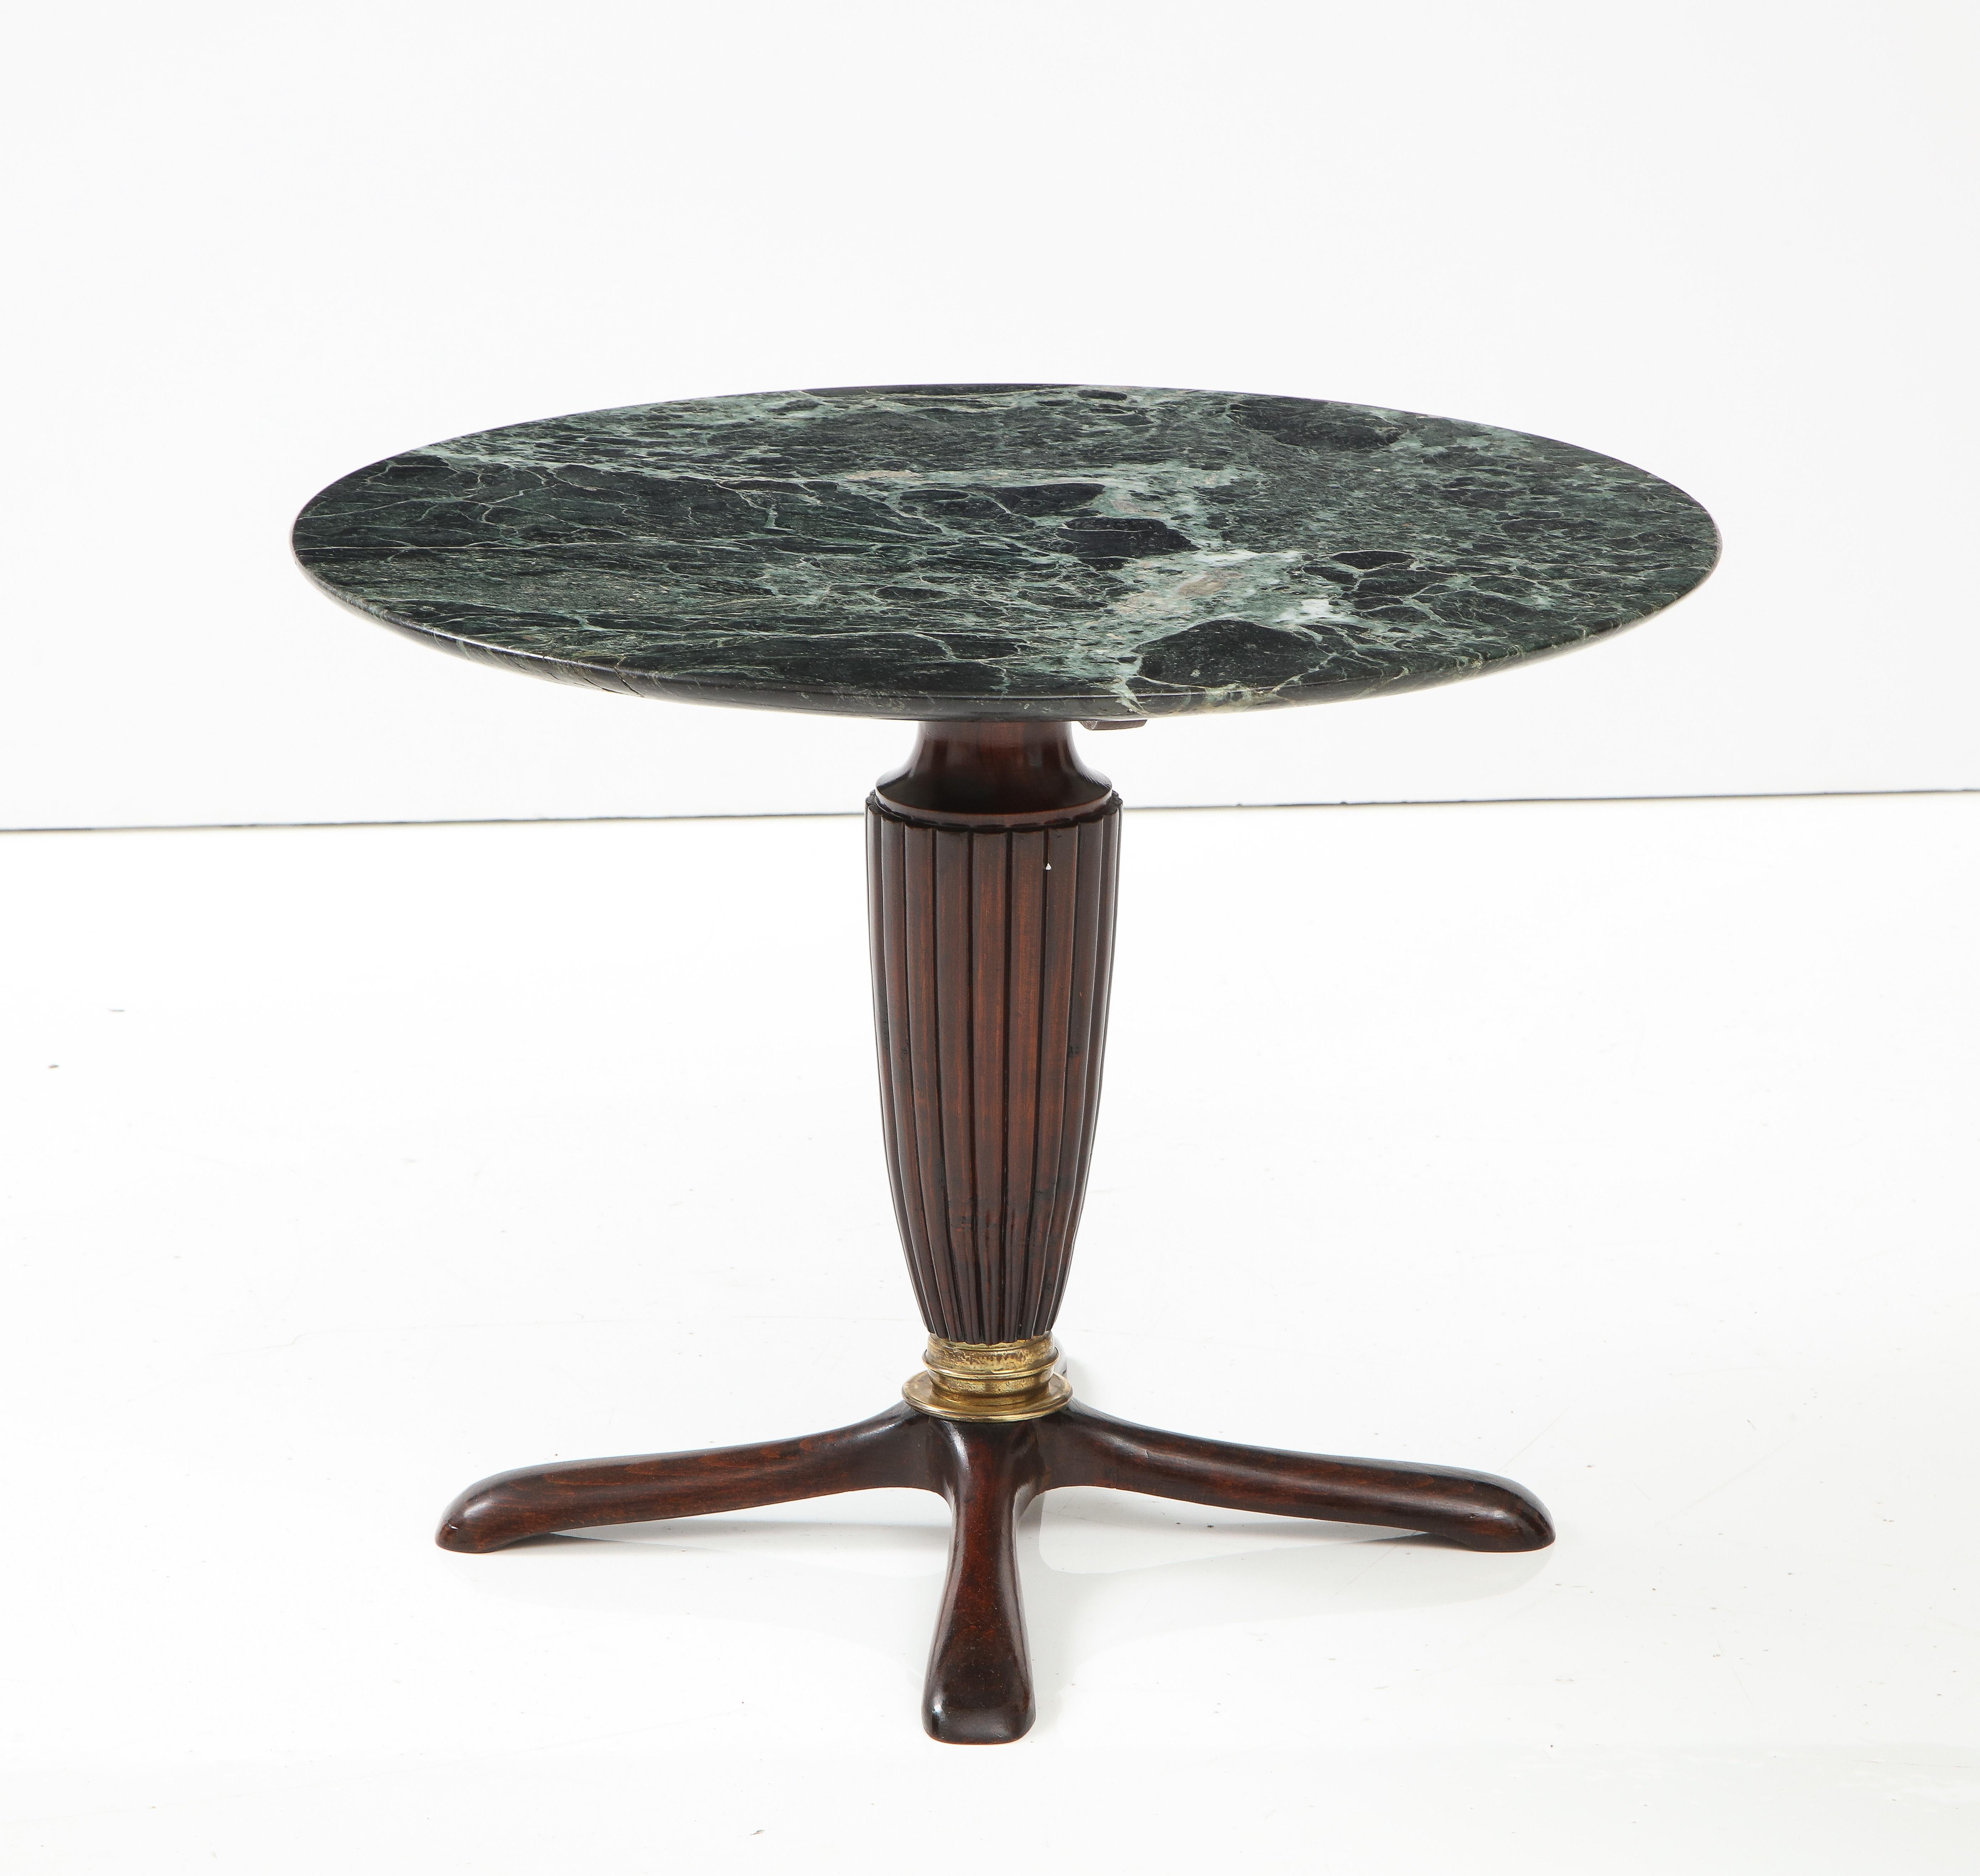 Italian Mahogany Circular Side Table with Verdi Alpi Marble Top, 1940's For Sale 1